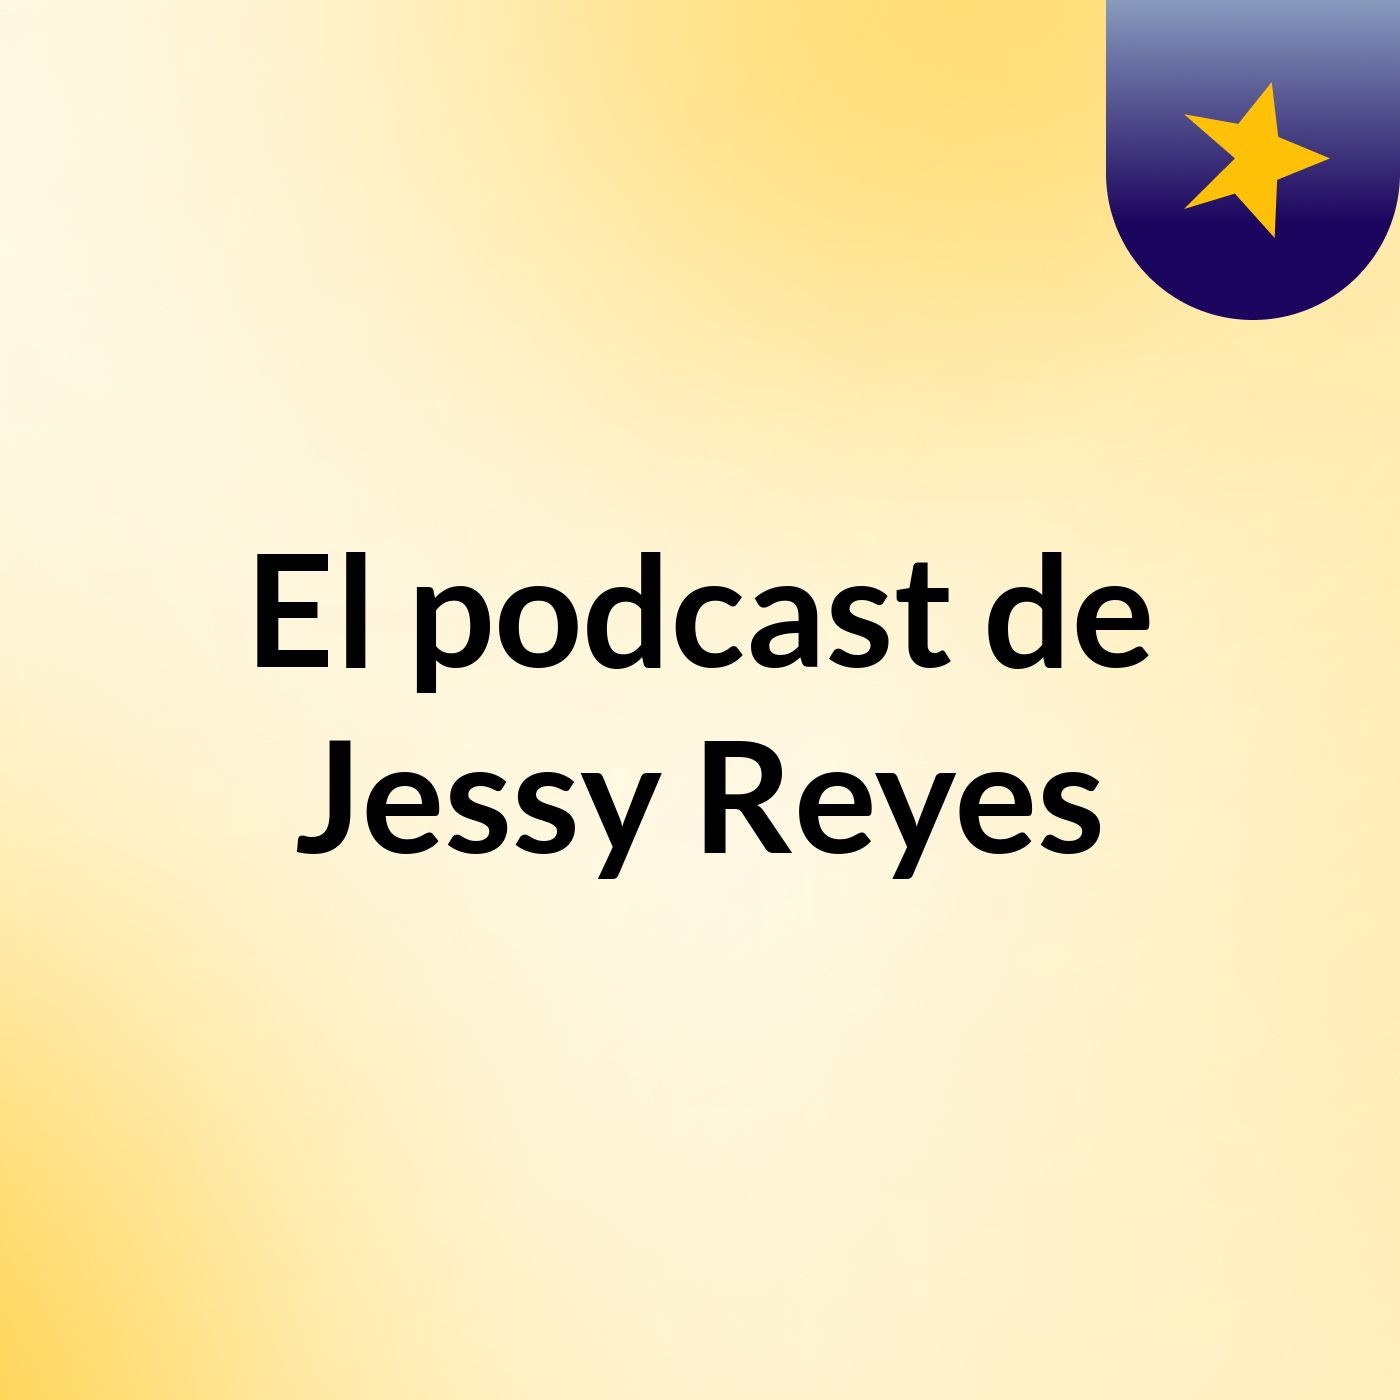 El podcast de Jessy Reyes